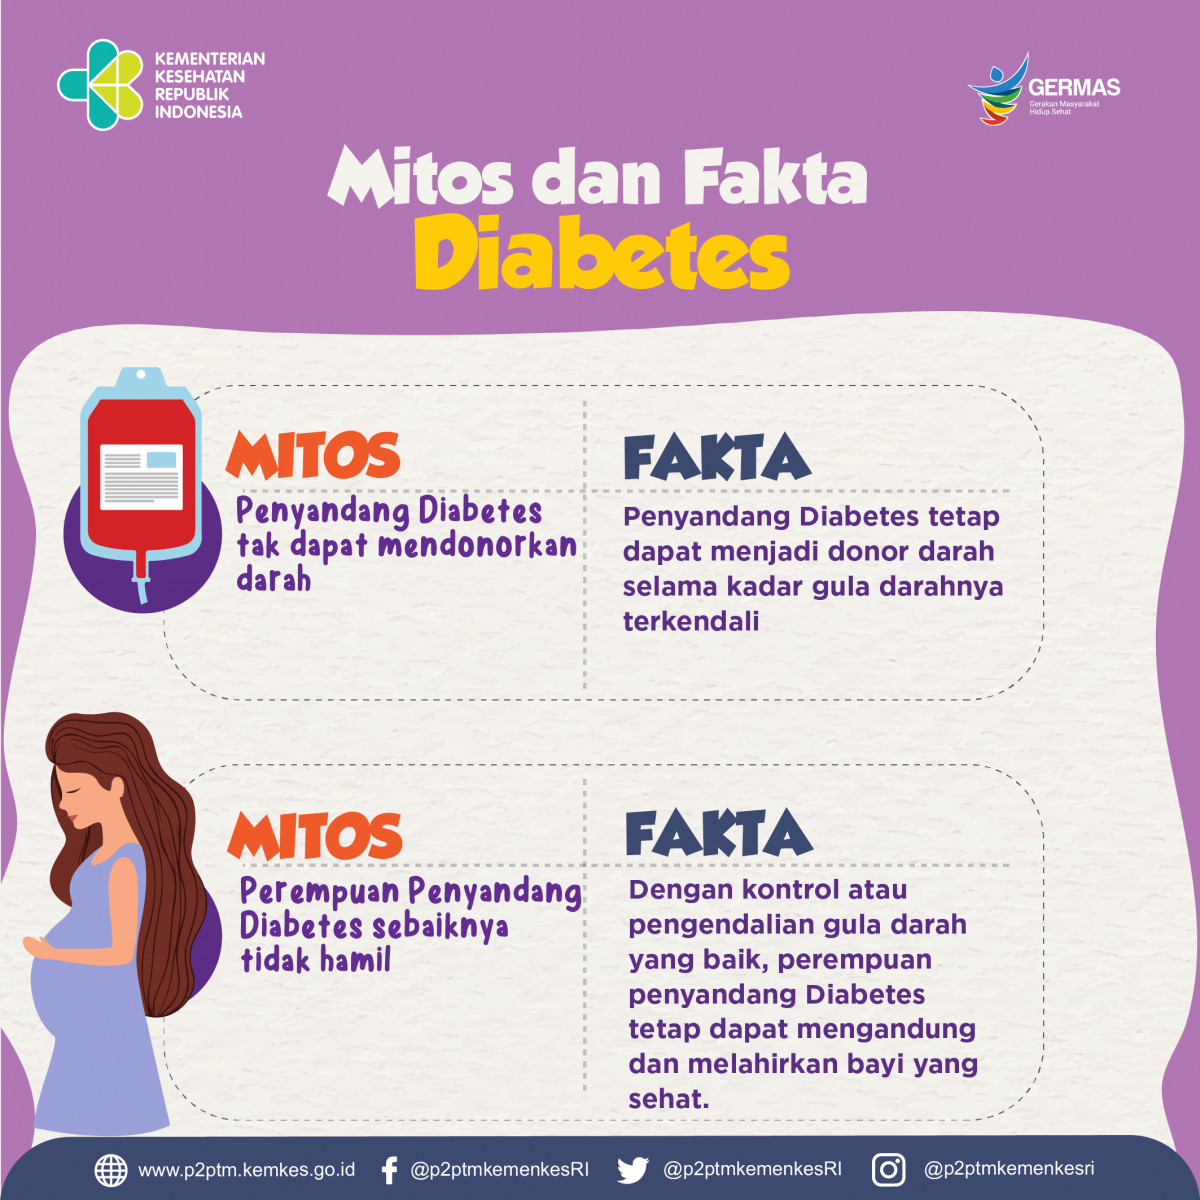 Yuk, simak mitos dan fakta mengenai Diabetes Melitus berikut ini.